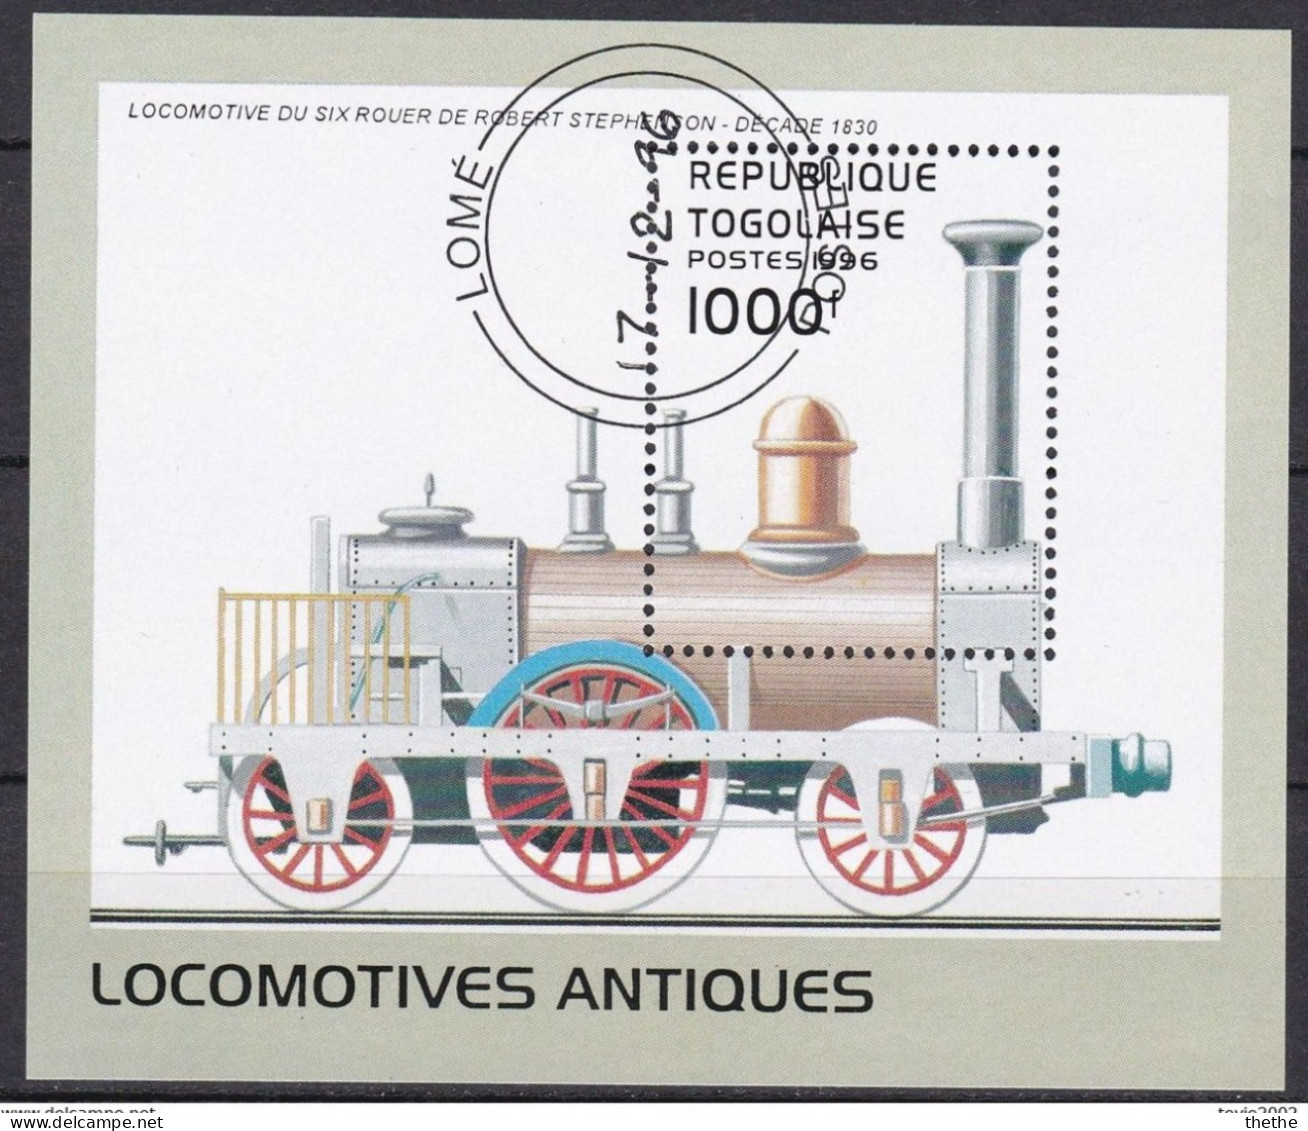 TOGO - Locomotive à Six Roues, Robert Stephenson, 1830 - Treni